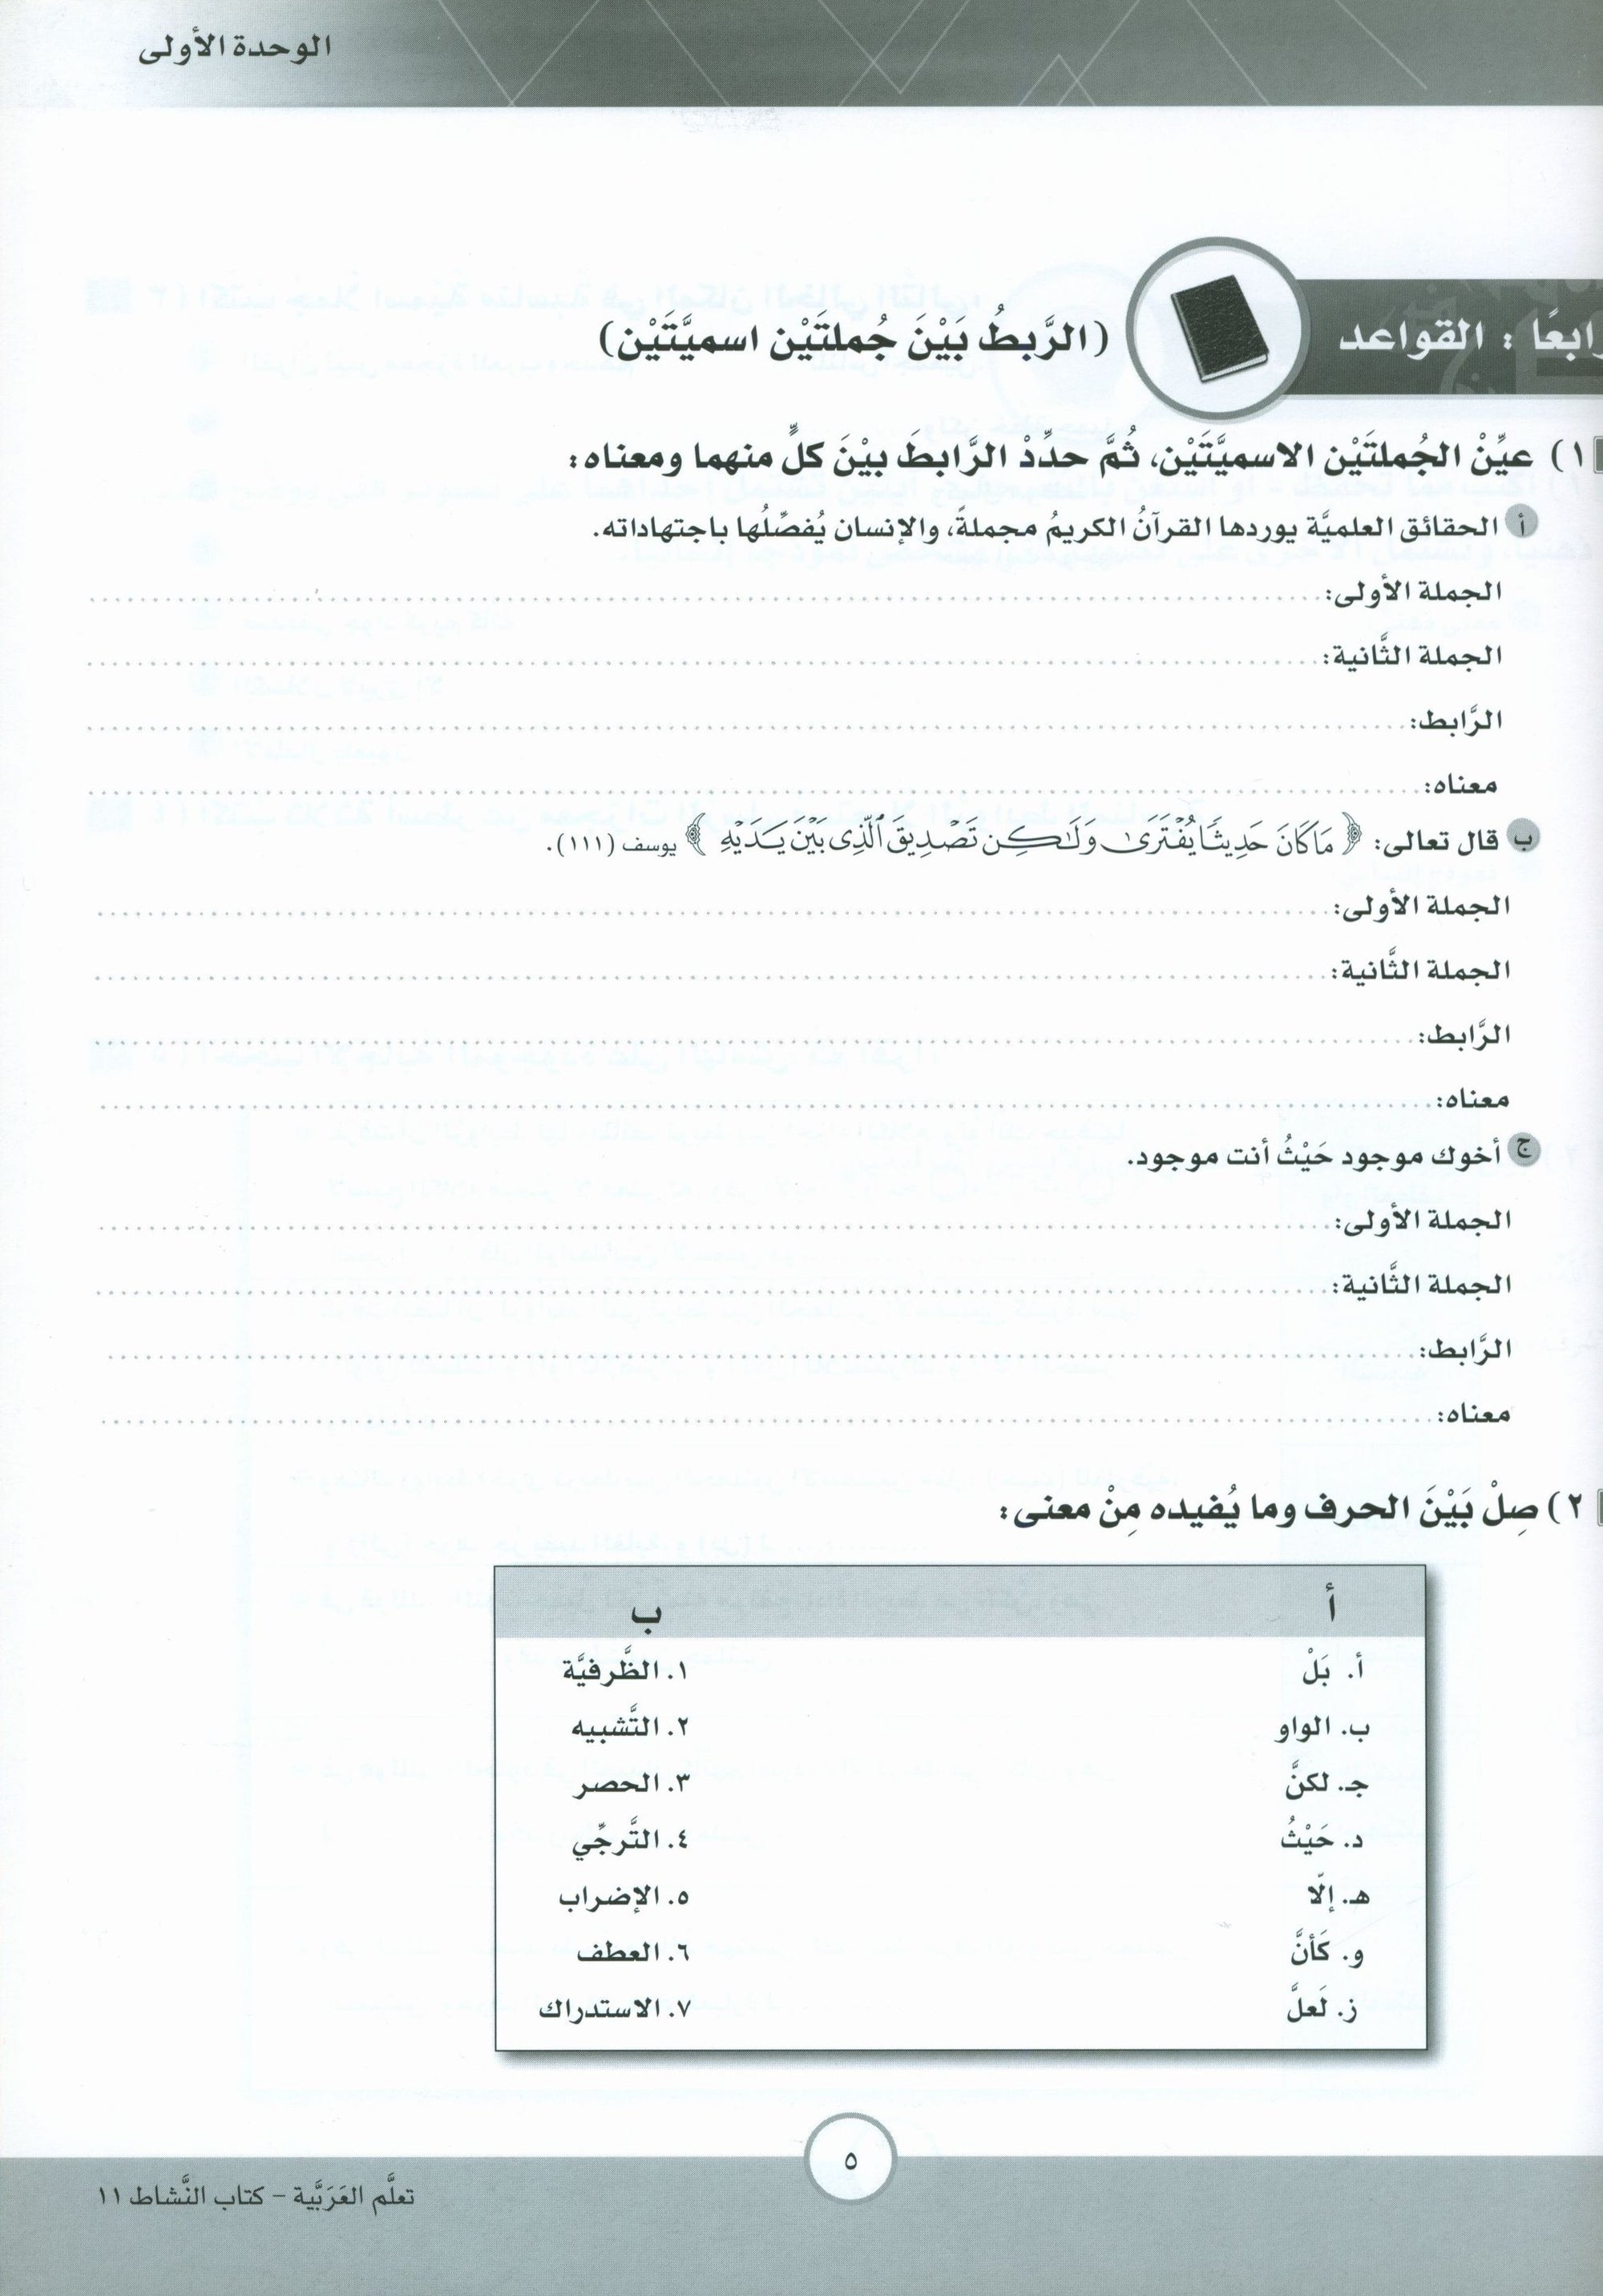 ICO Learn Arabic Workbook Level 11 Part 1 تعلم العربية كتاب التدريبات